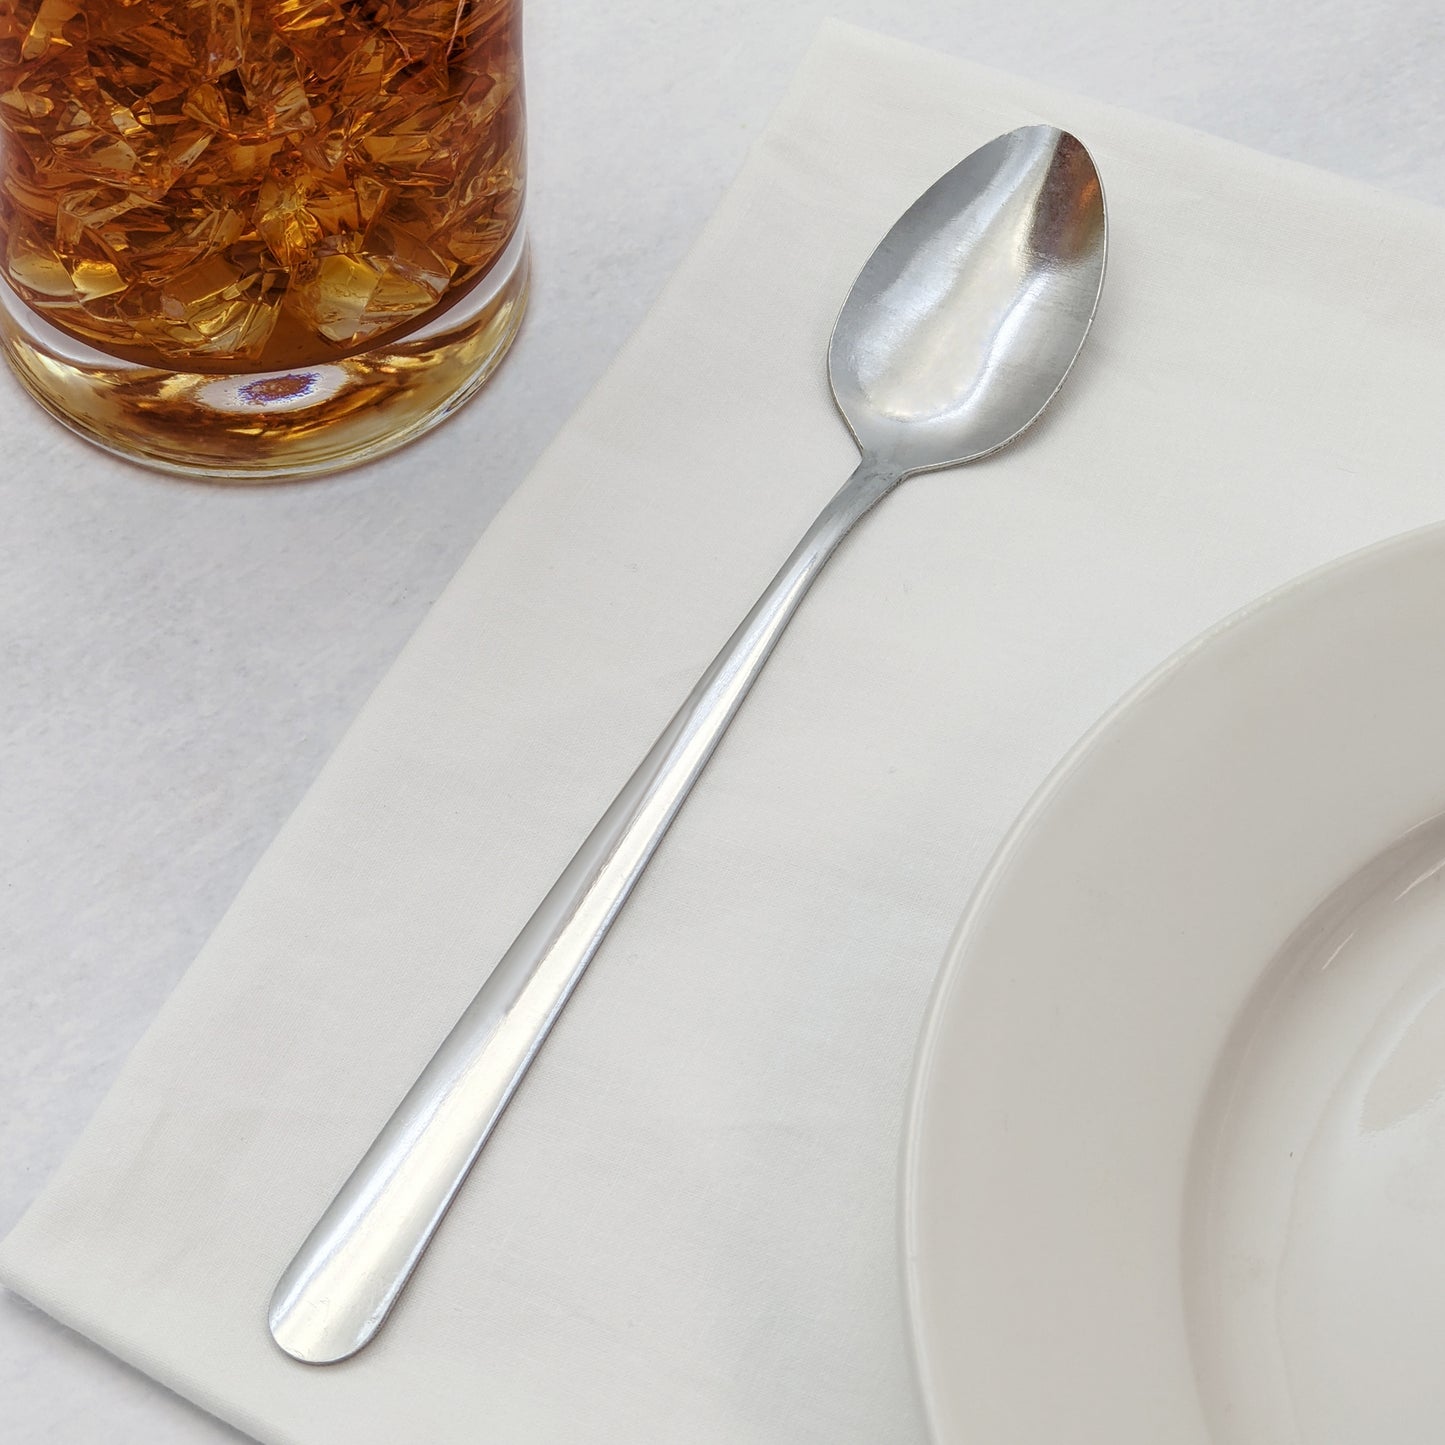 0002-02 - Windsor Iced Tea Spoon, 18/0 Medium Weight